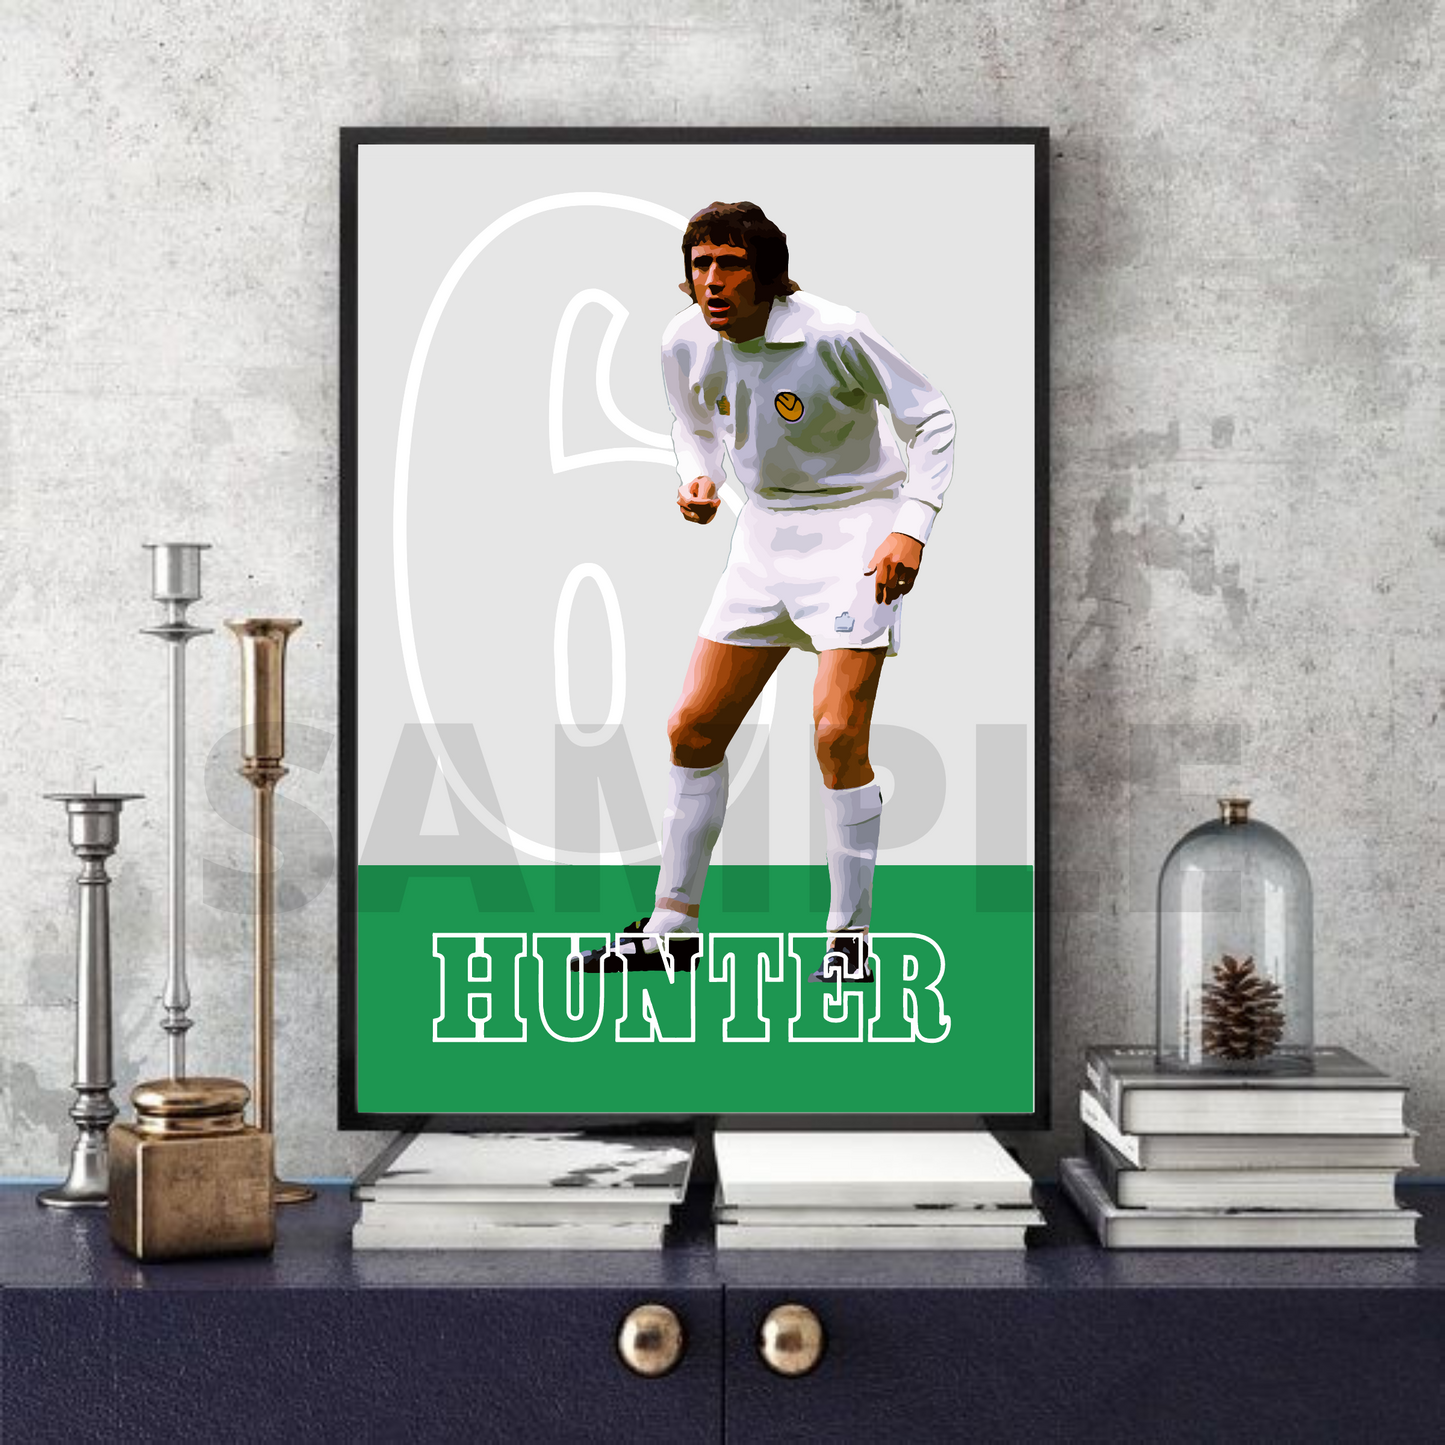 Norman Hunter - Leeds United legend Football Memorabilia/Collectible/Signed print